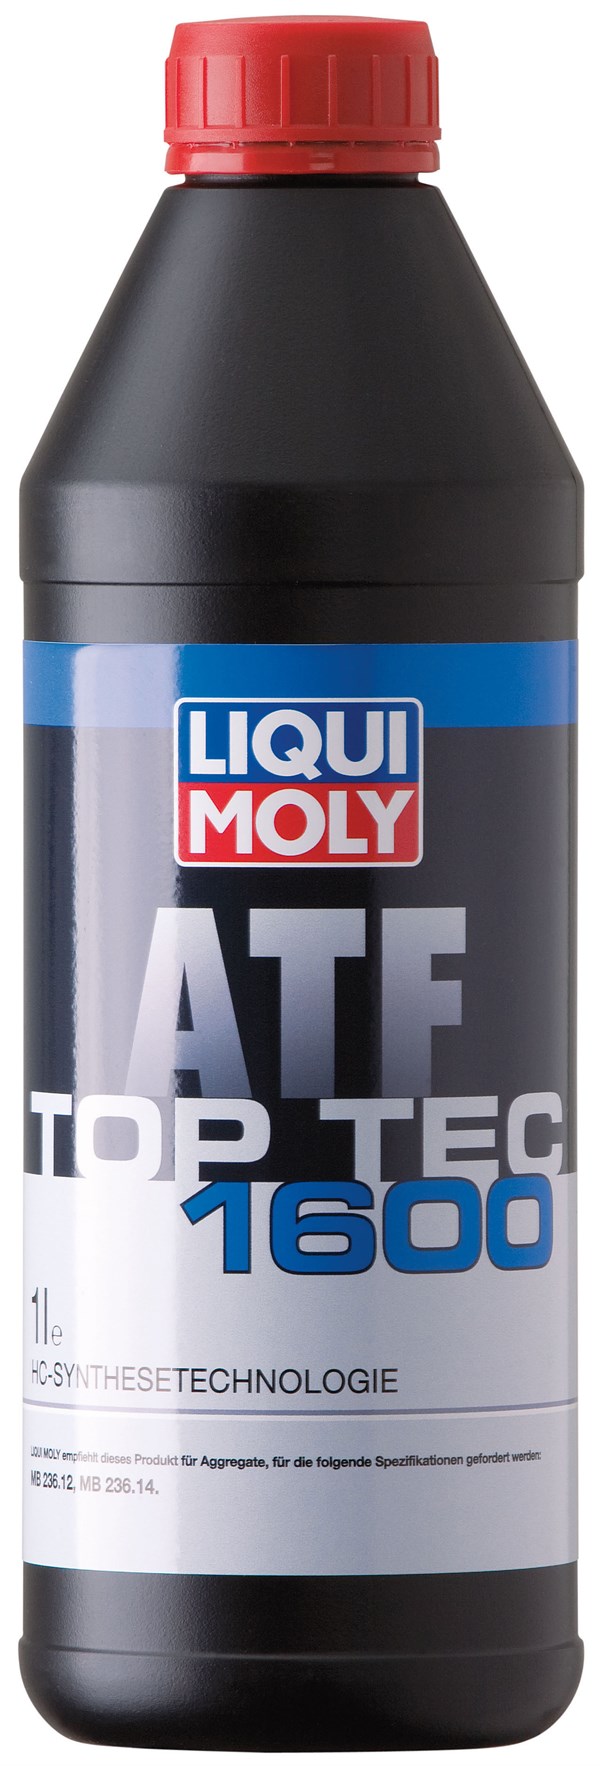 Liqui Moly Gearolie Top Tec ATF 1600 (1 liter)